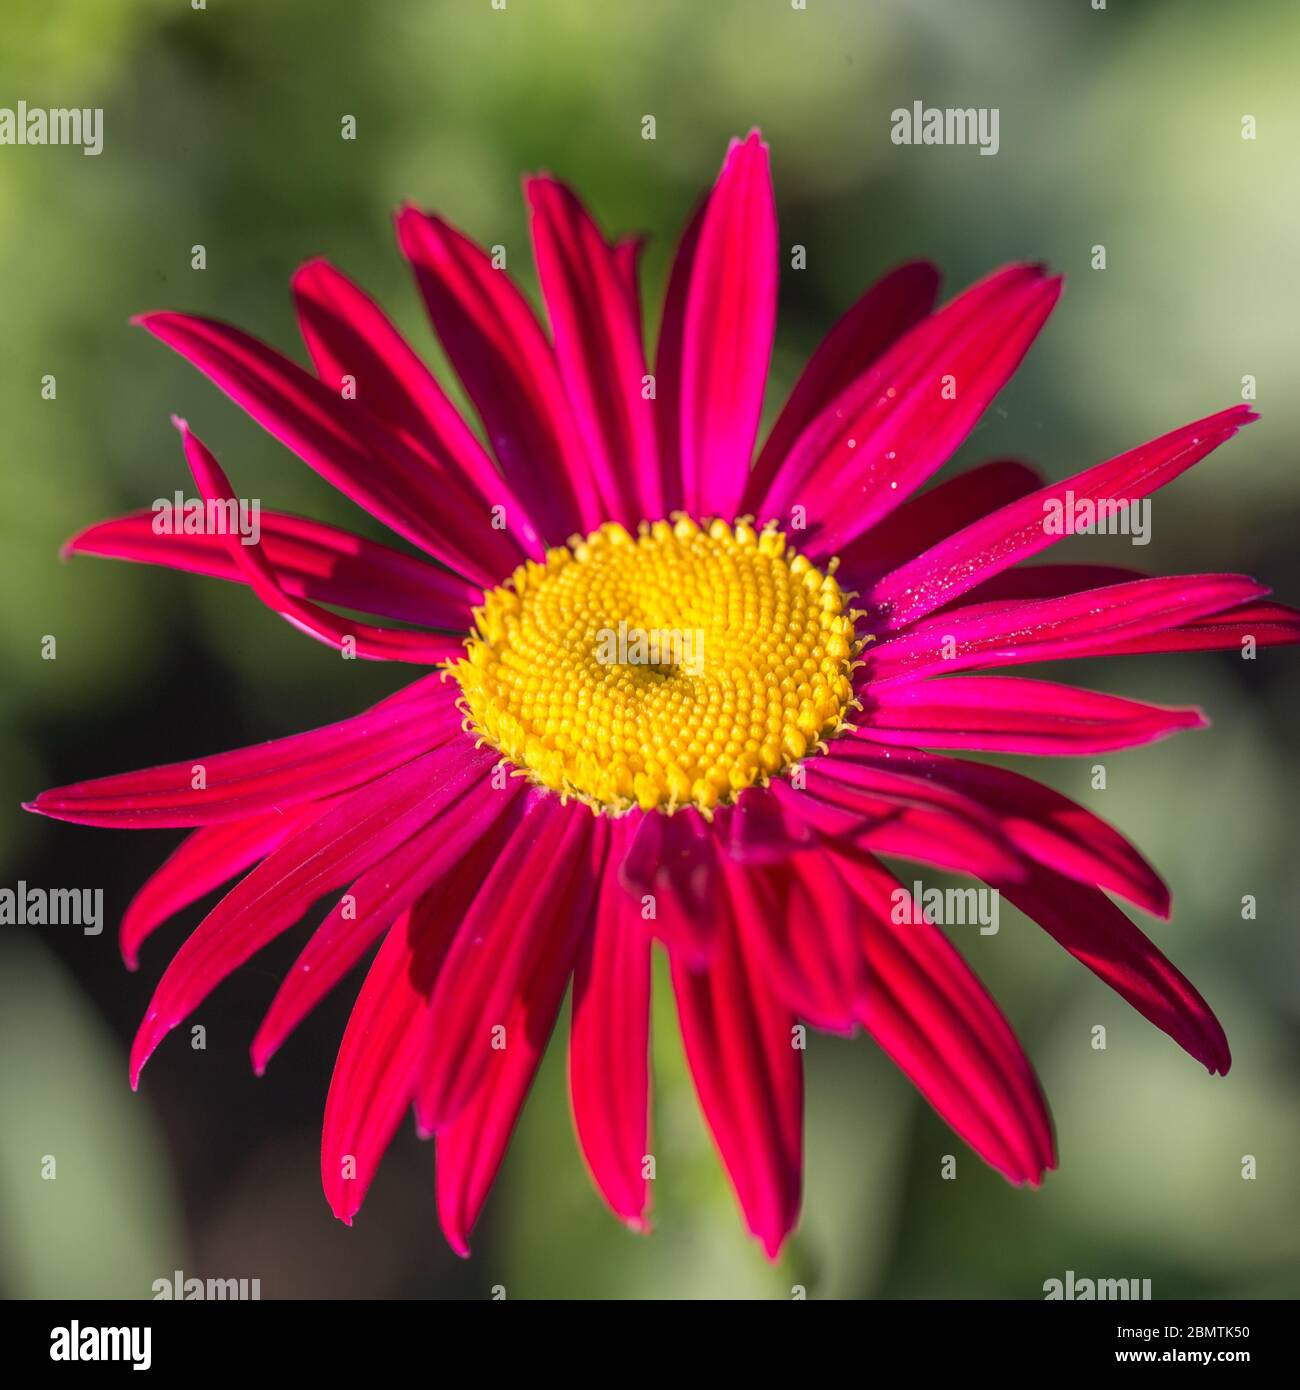 Yellow center of red beautiful pyrethrum flower showing fibonacci pattern. Stock Photo